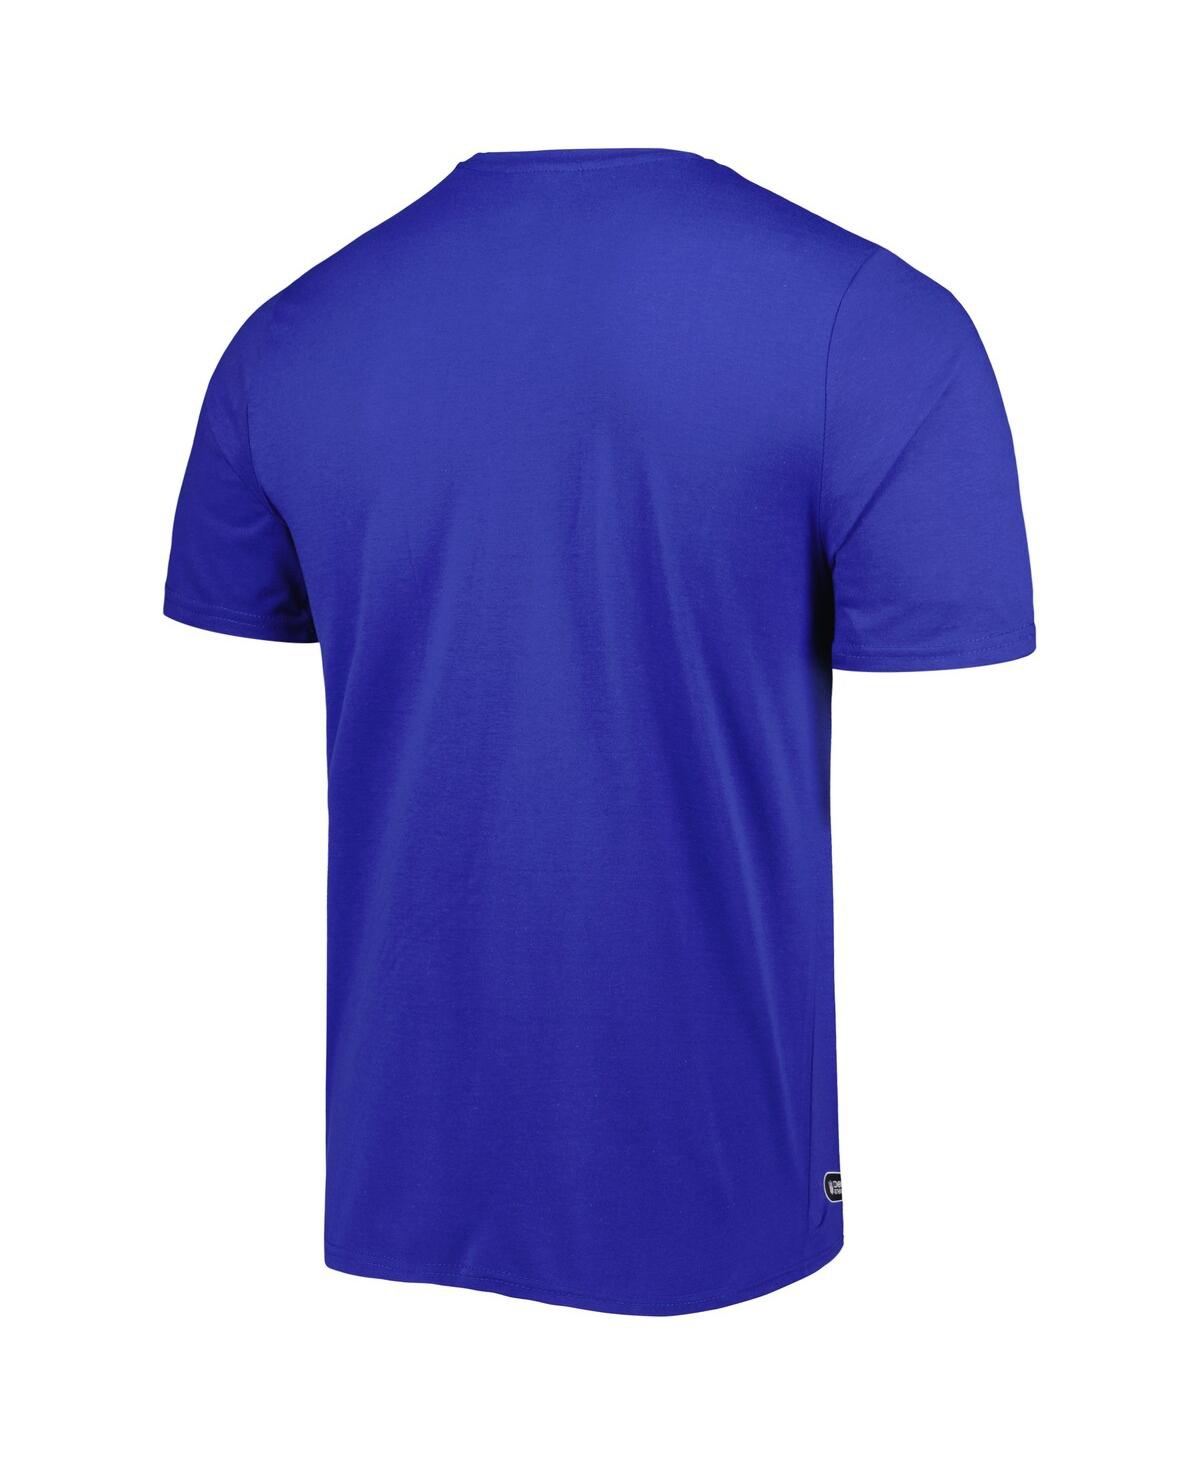 Shop New Era Men's  Royal Los Angeles Rams Combine Authentic Training Huddle Up T-shirt